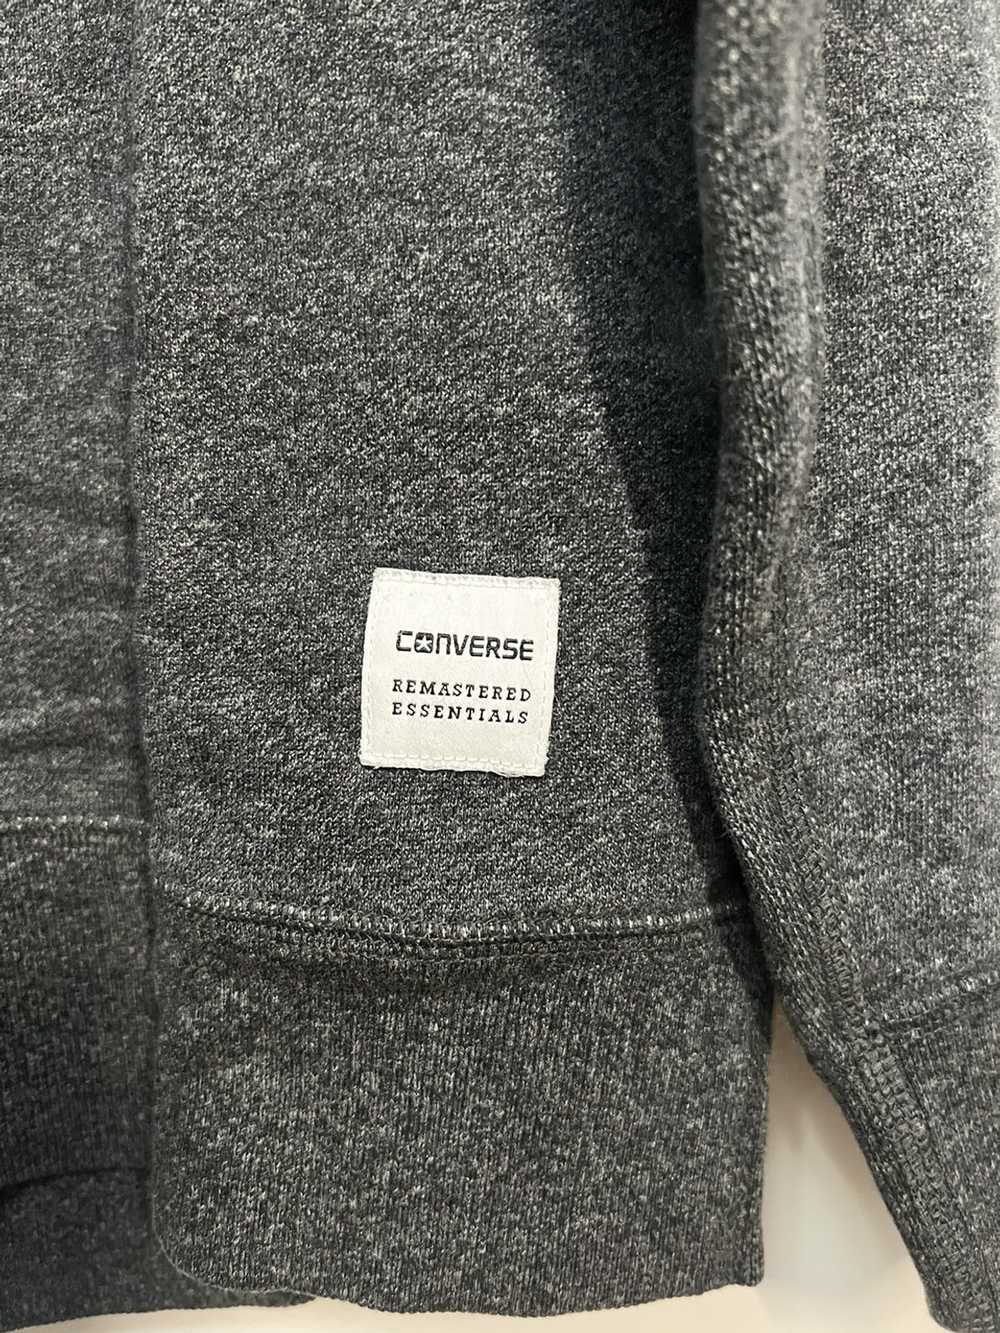 Converse Converse Essentials - image 2